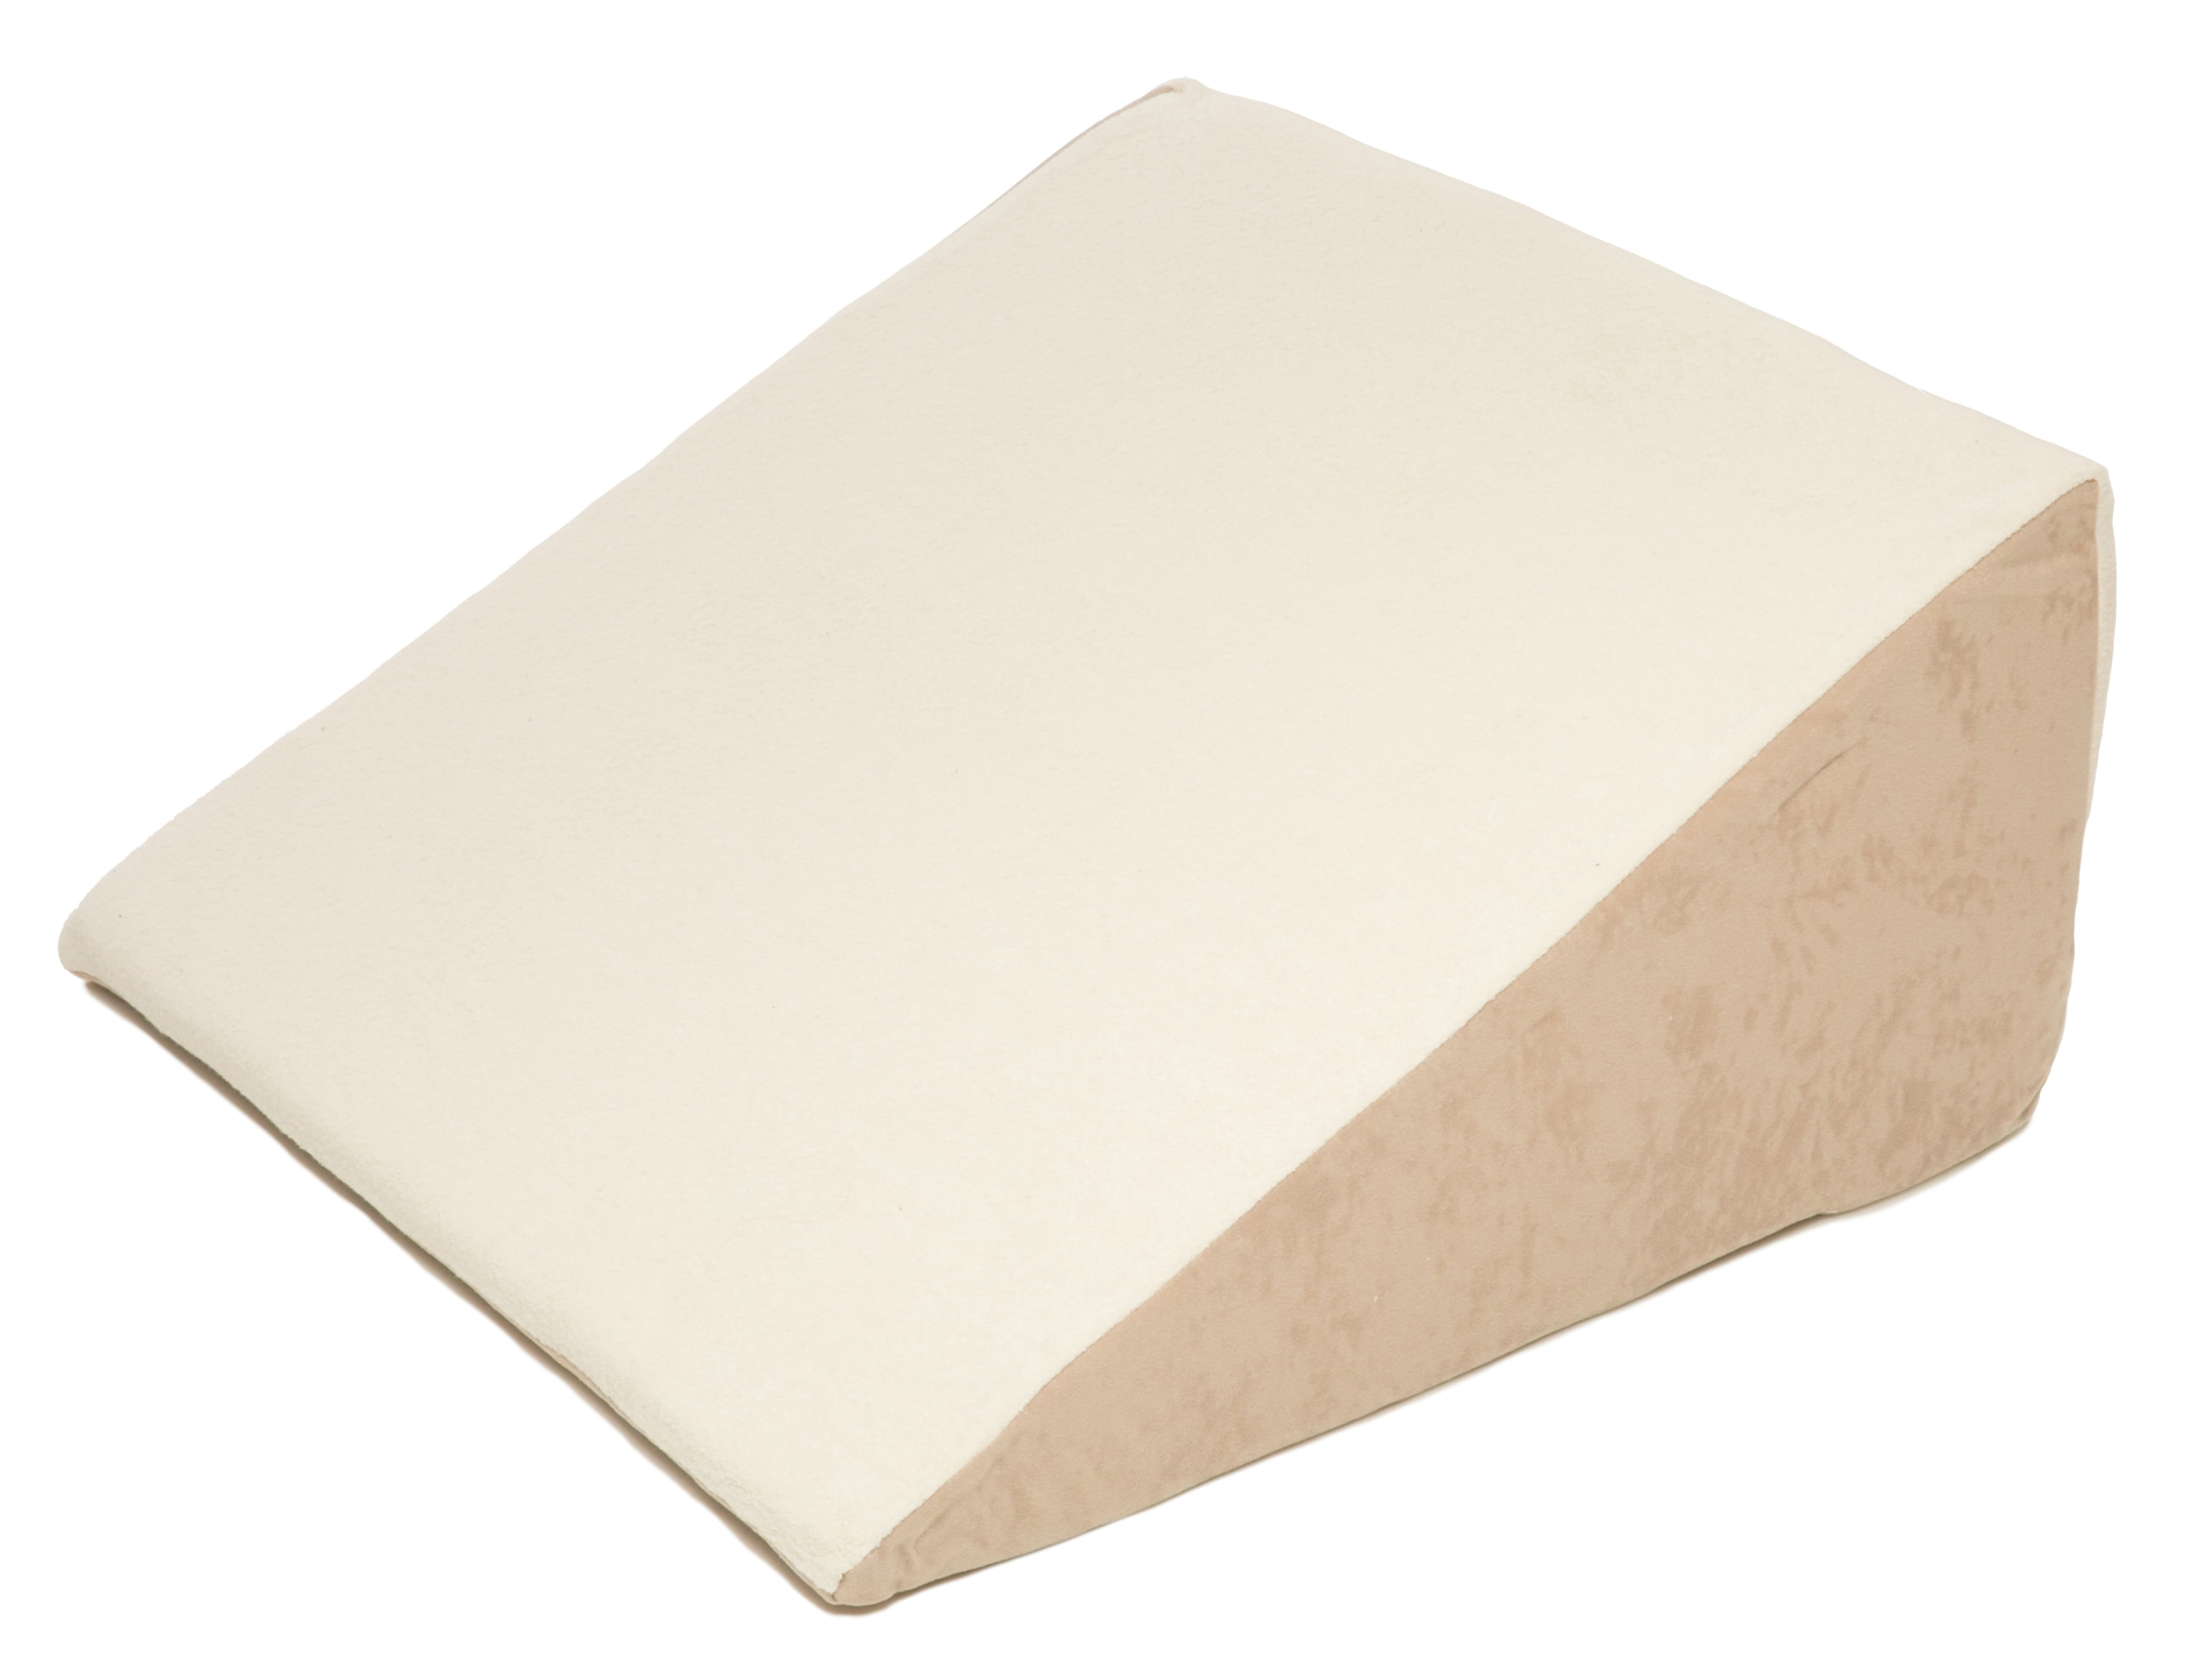 9 x 6 x 2 inch Felter's Foam Mat – Brooklyn Craft Company